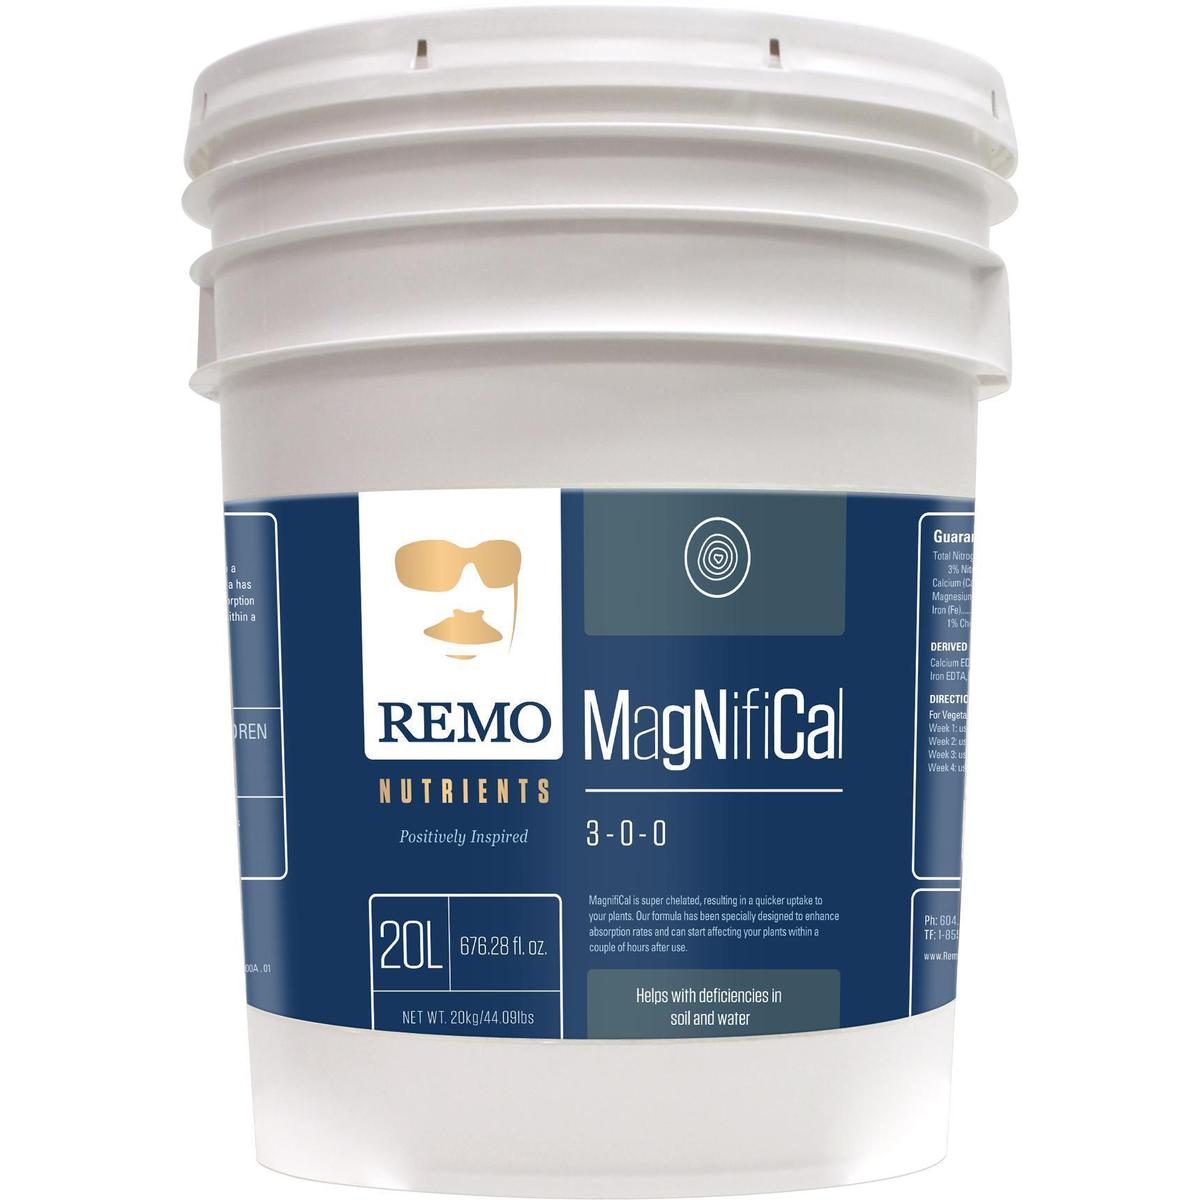 Remo-Nutrients-Magnifical-20L